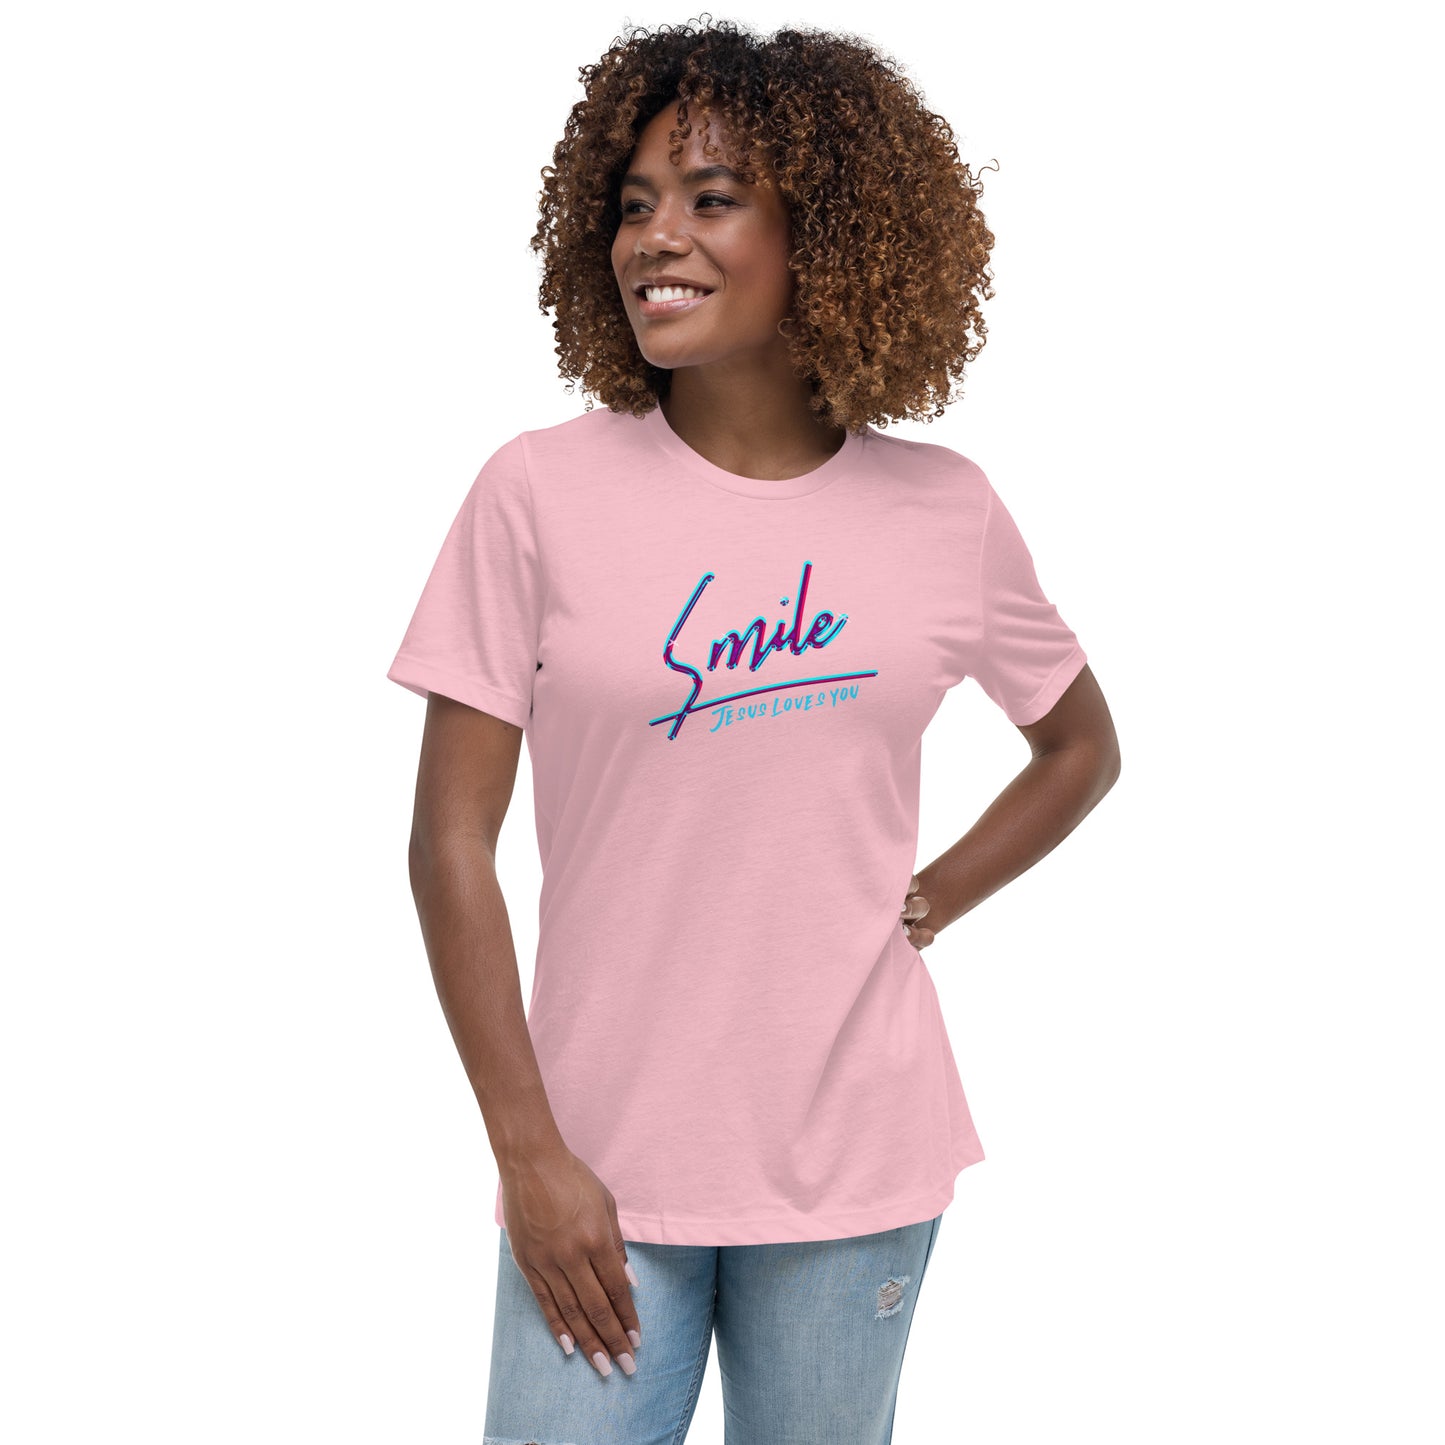 Smile Women's T-Shirt